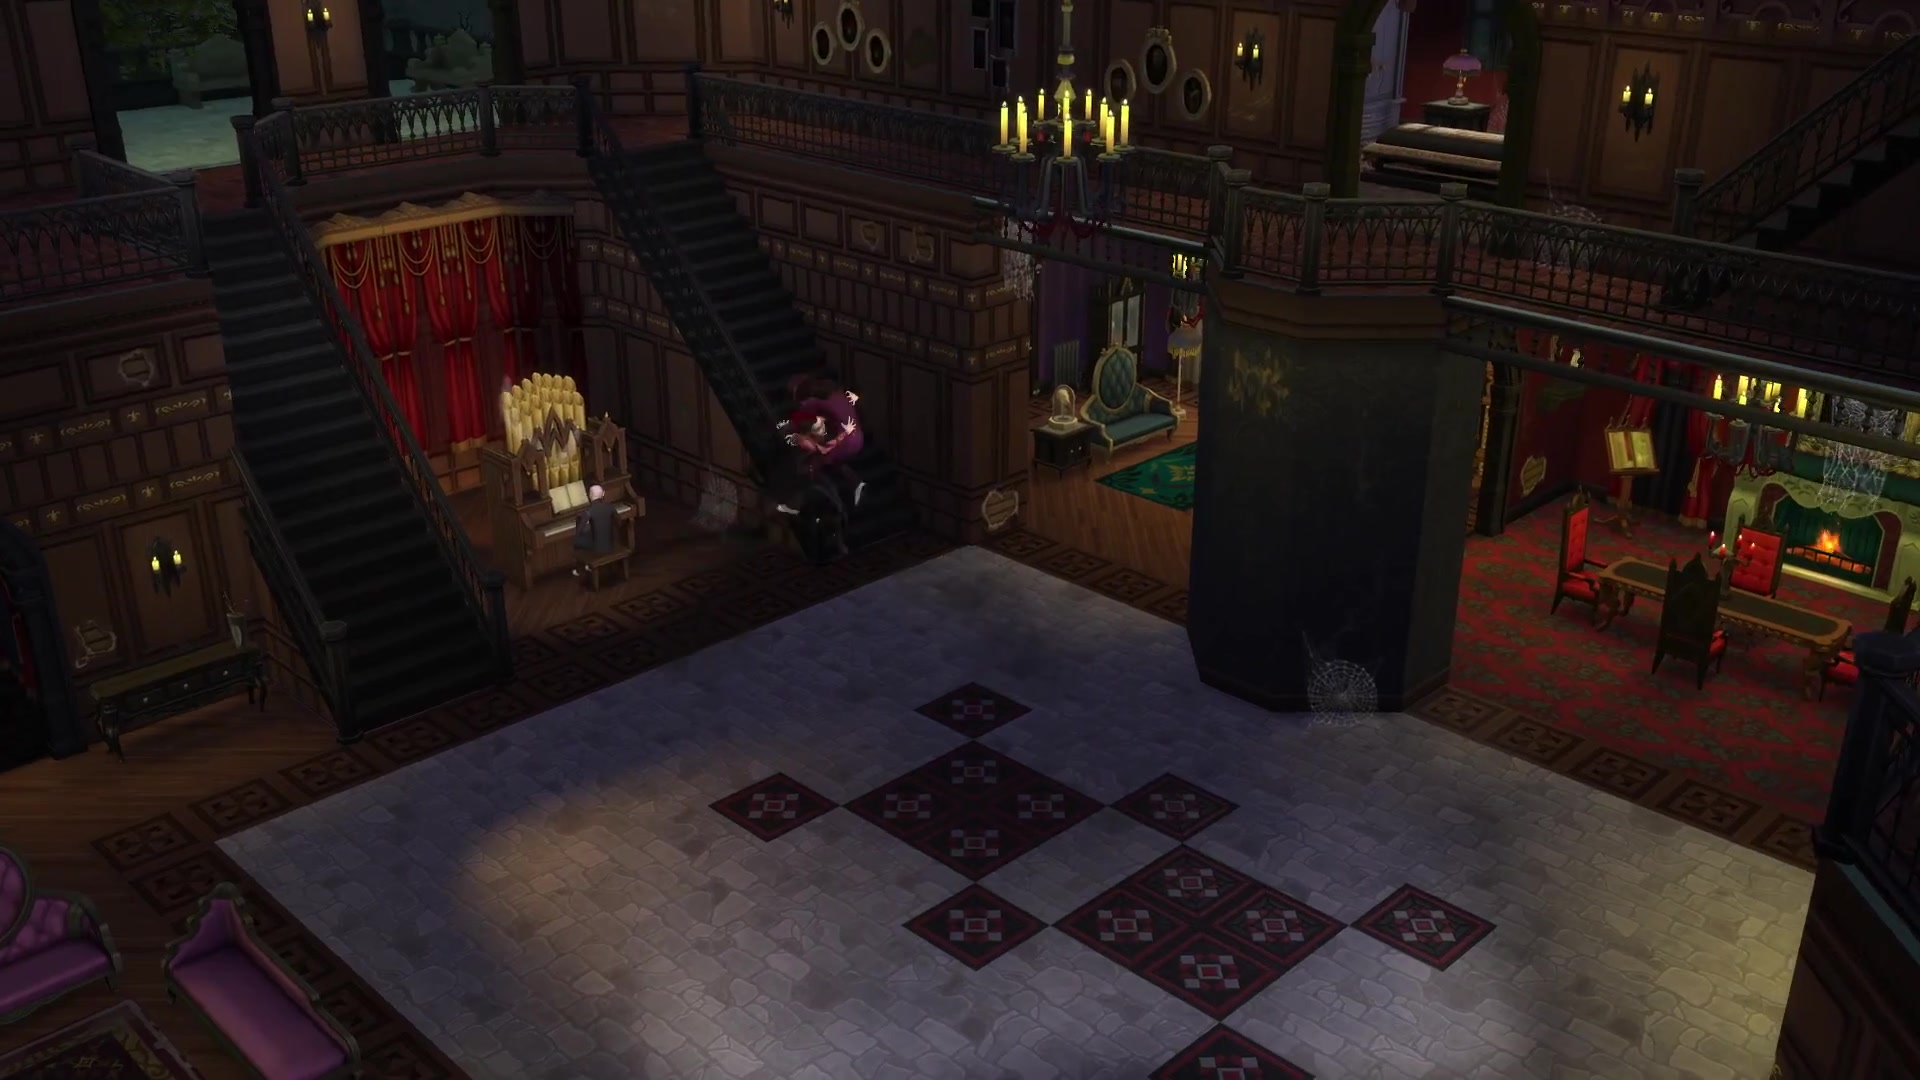 The Sims 4 Vampires Game Pack: 70+ Trailer Screens